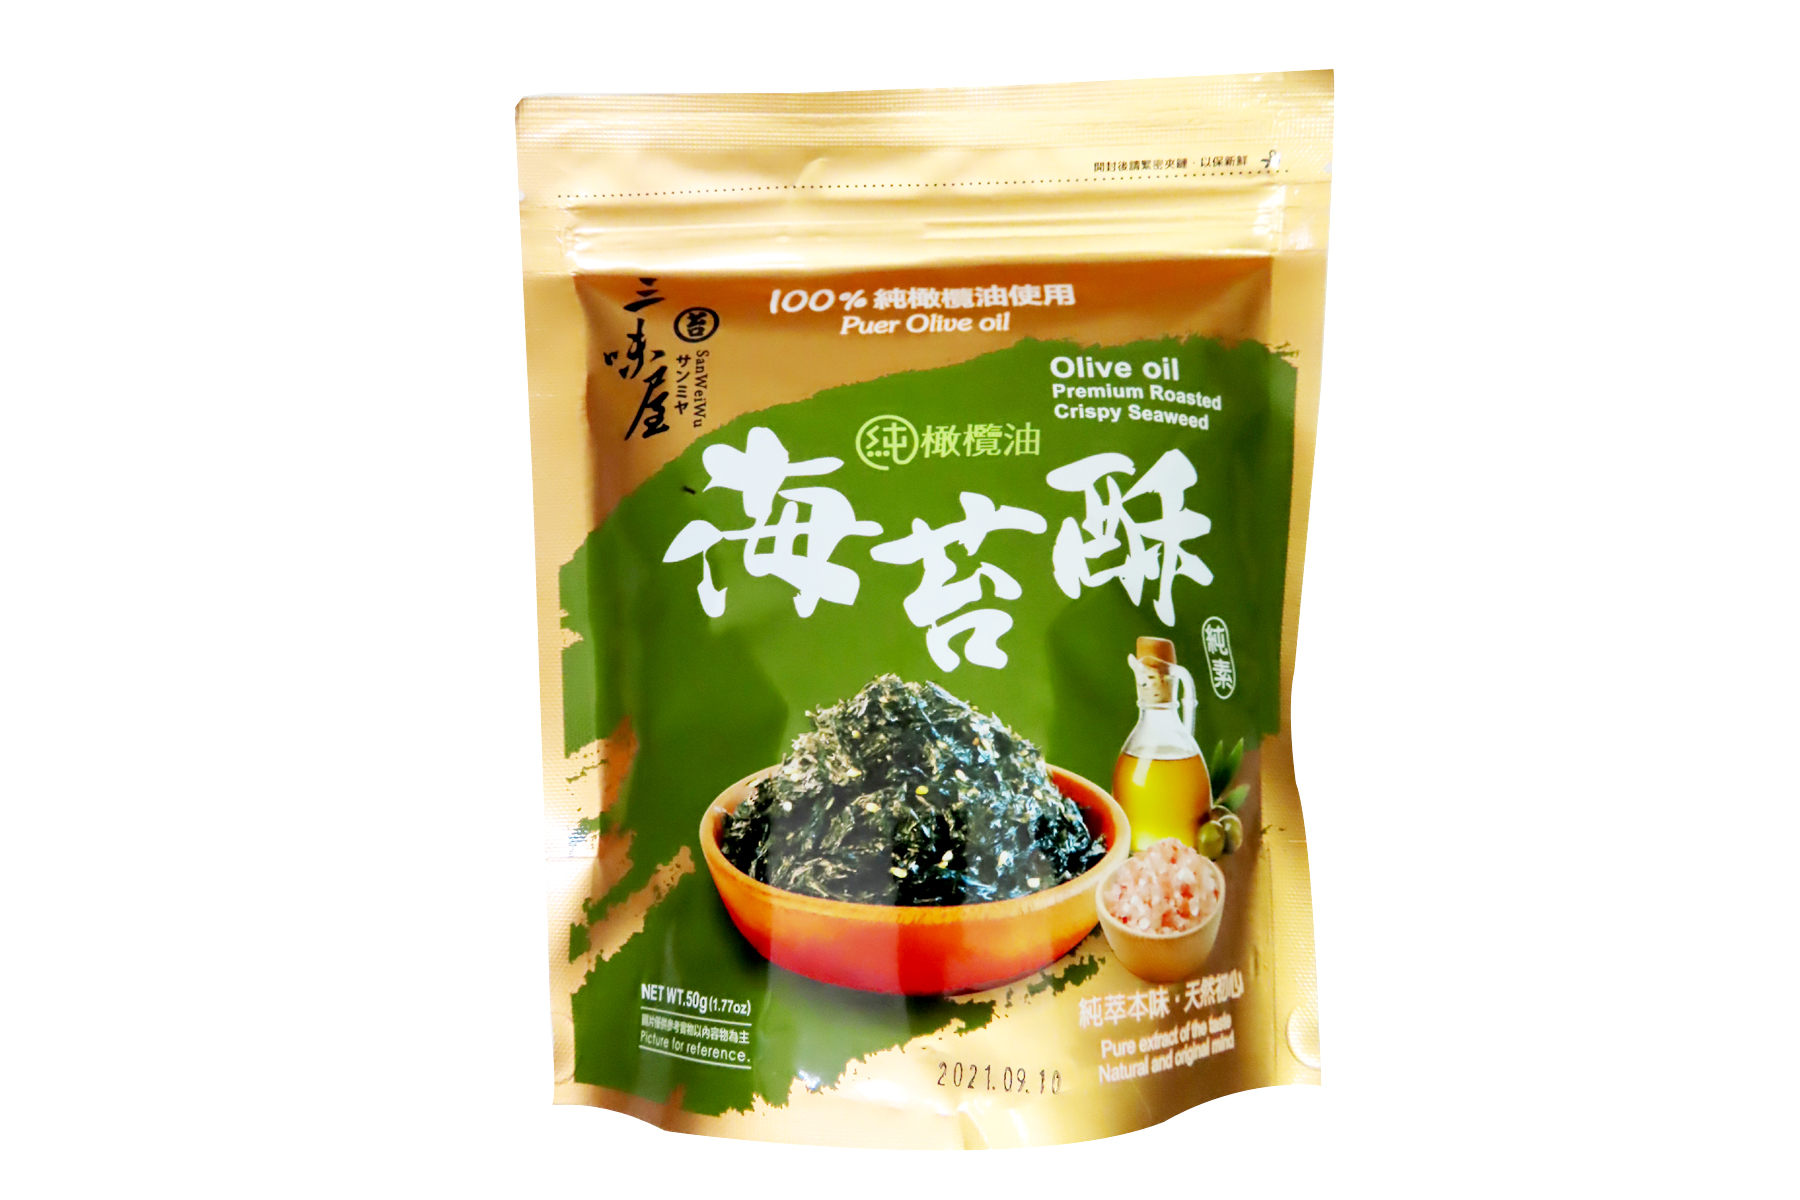 Image Olive Oil Premium Roasted Crispy Seaweed 三味屋-橄榄油海苔酥 50grams